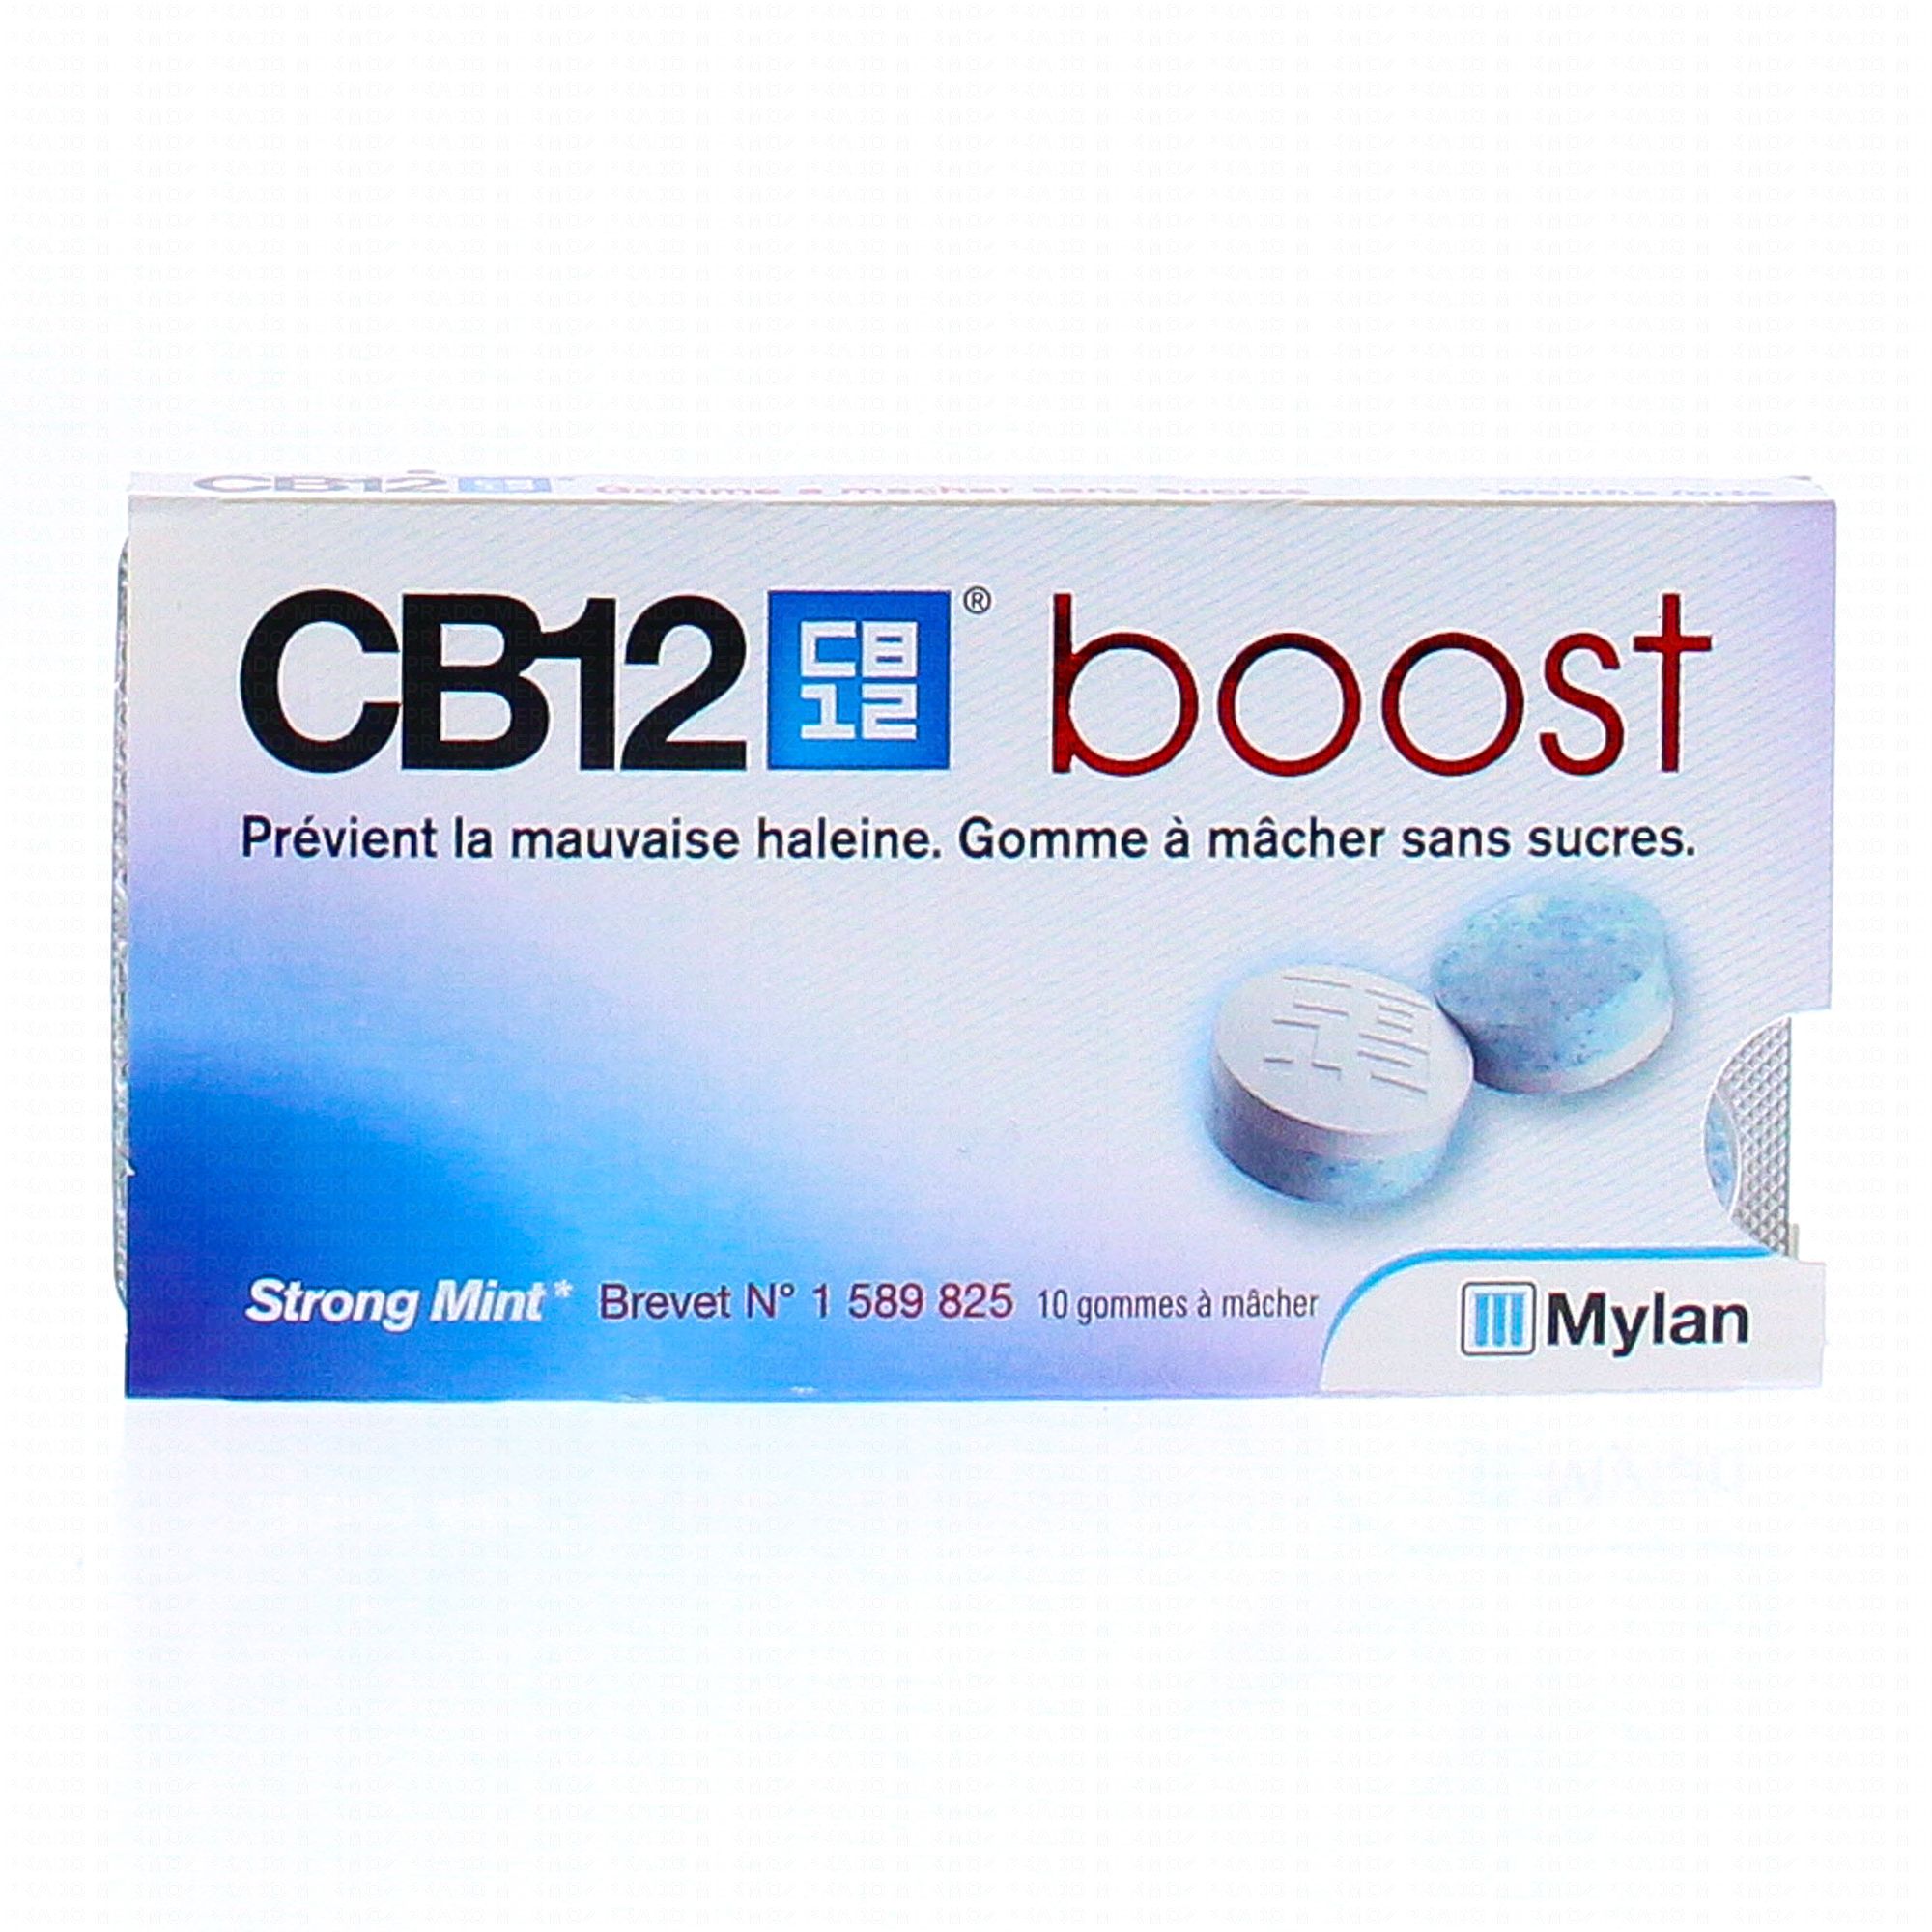 CB12 Boost gomme à mâcher sans sucres x 10 - Parapharmacie Prado Mermoz